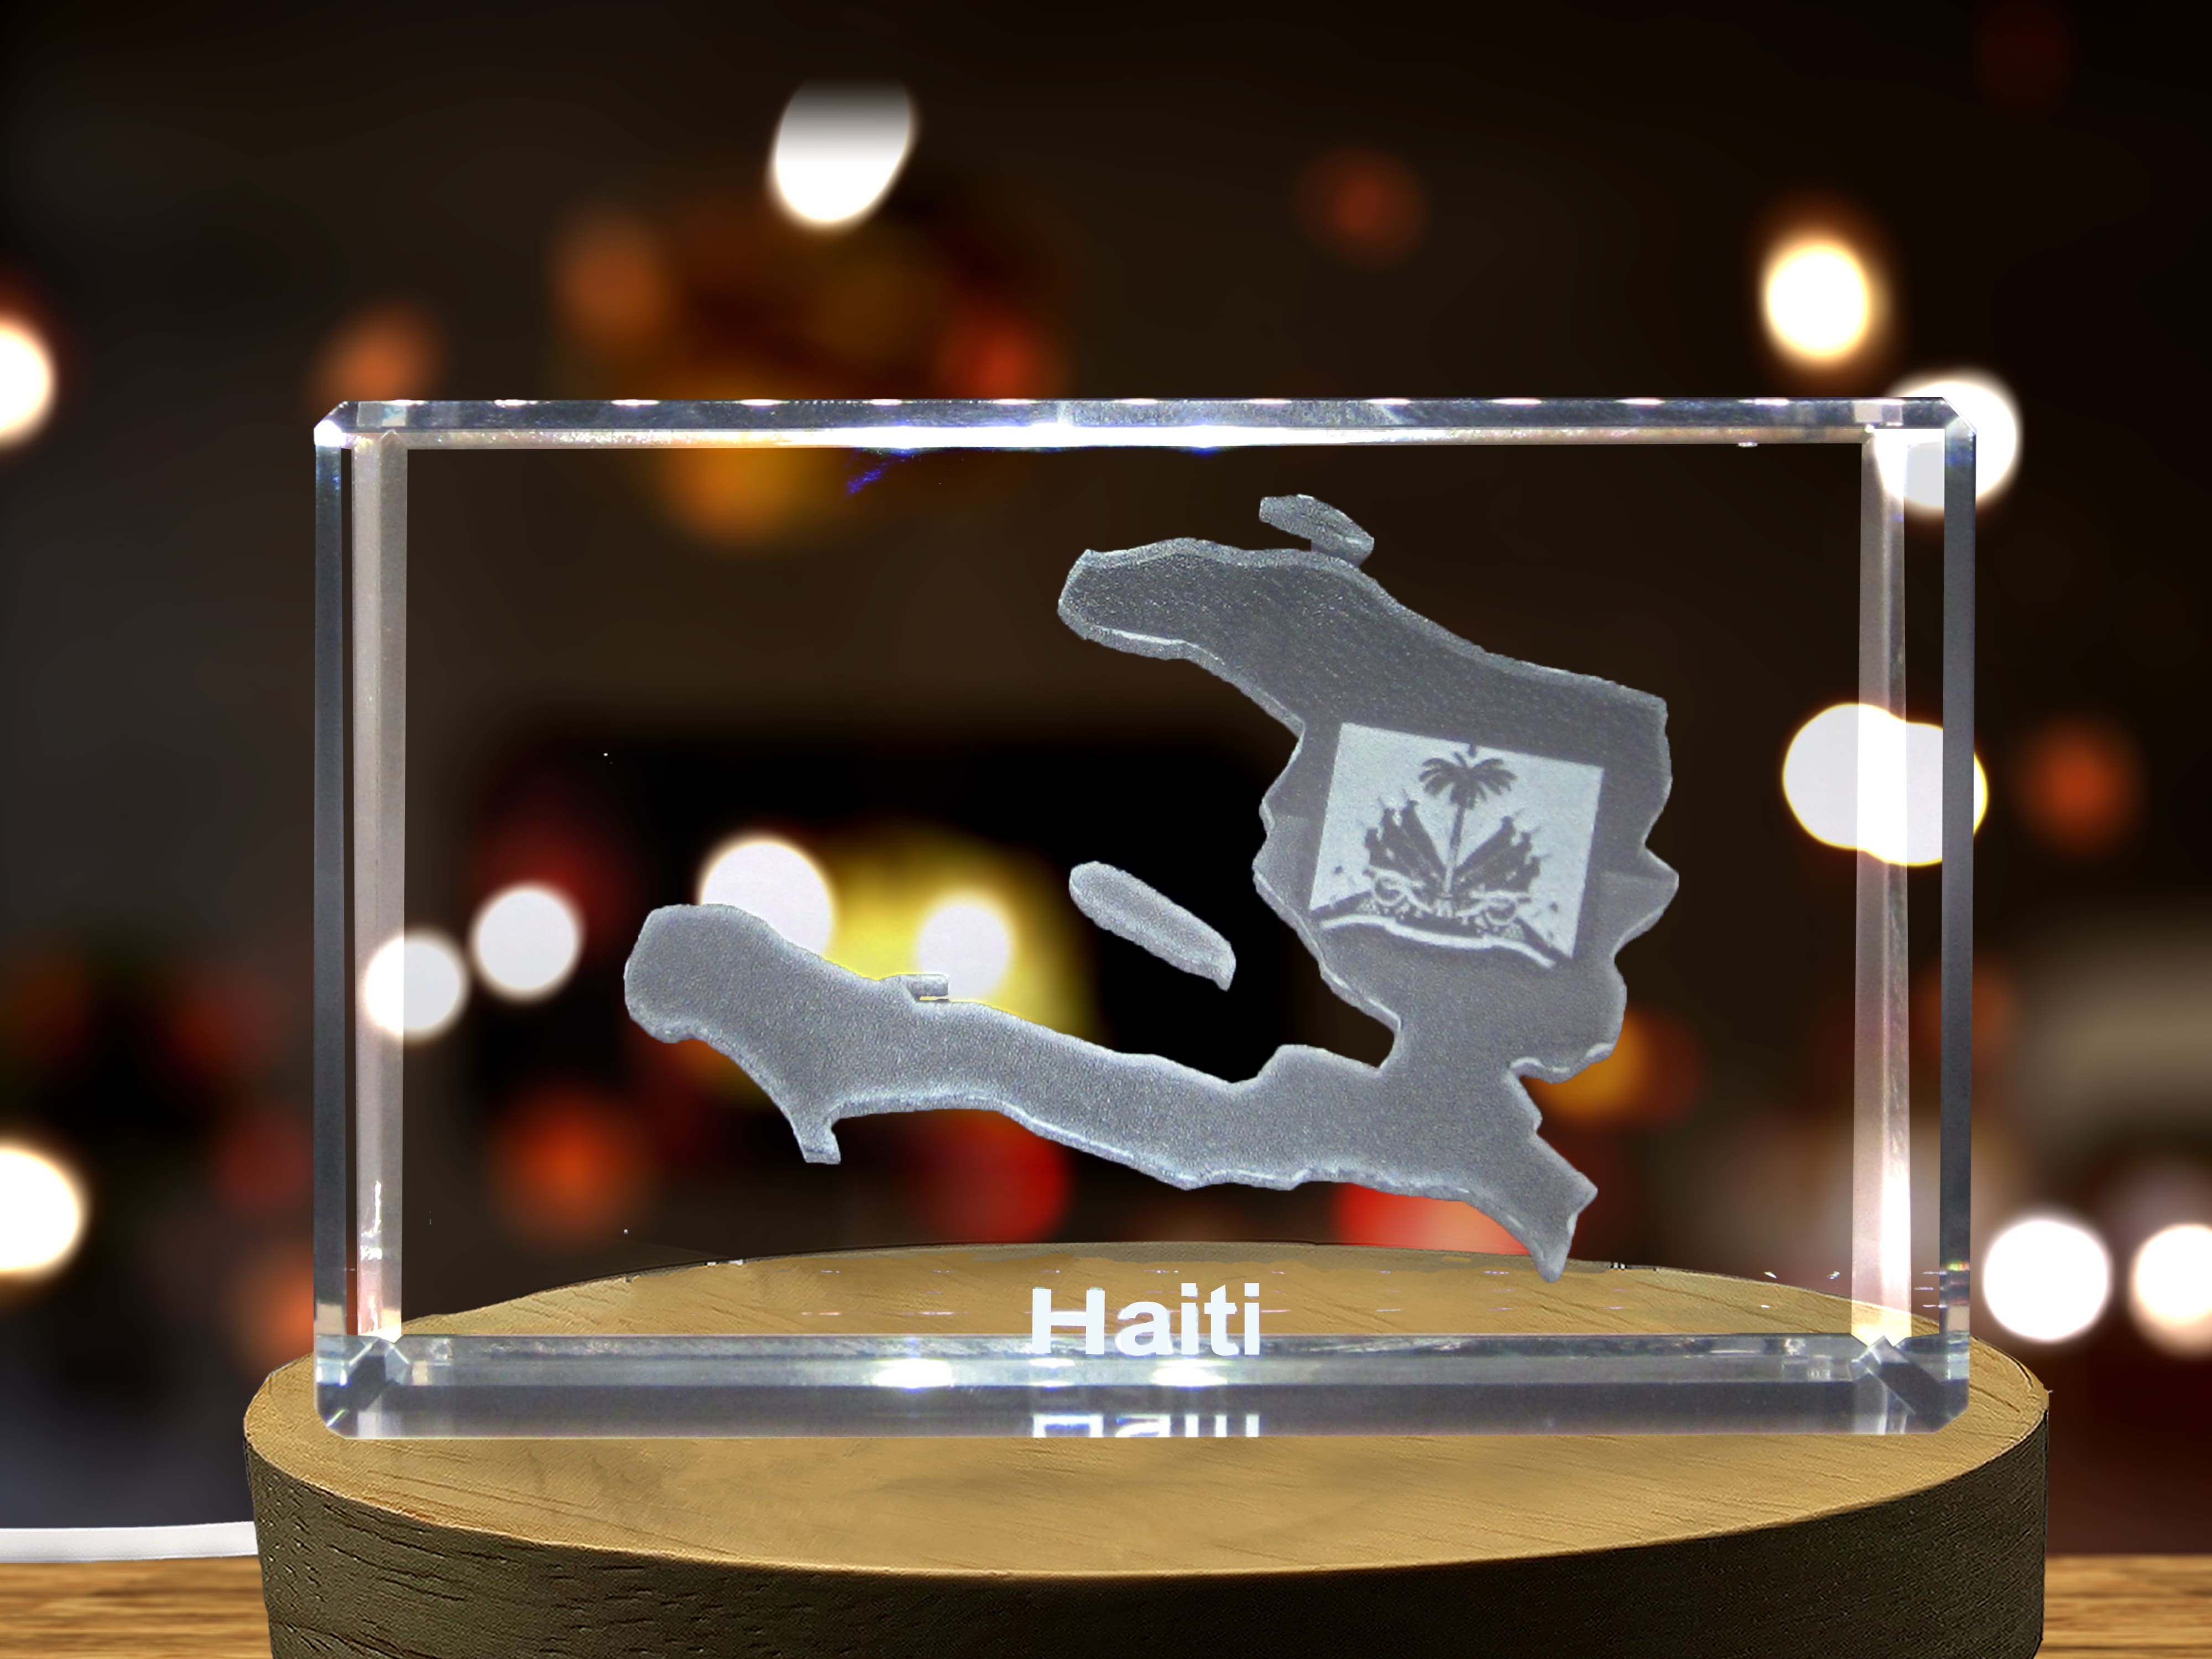 Haiti 3D Engraved Crystal 3D Engraved Crystal Keepsake/Gift/Decor/Collectible/Souvenir A&B Crystal Collection